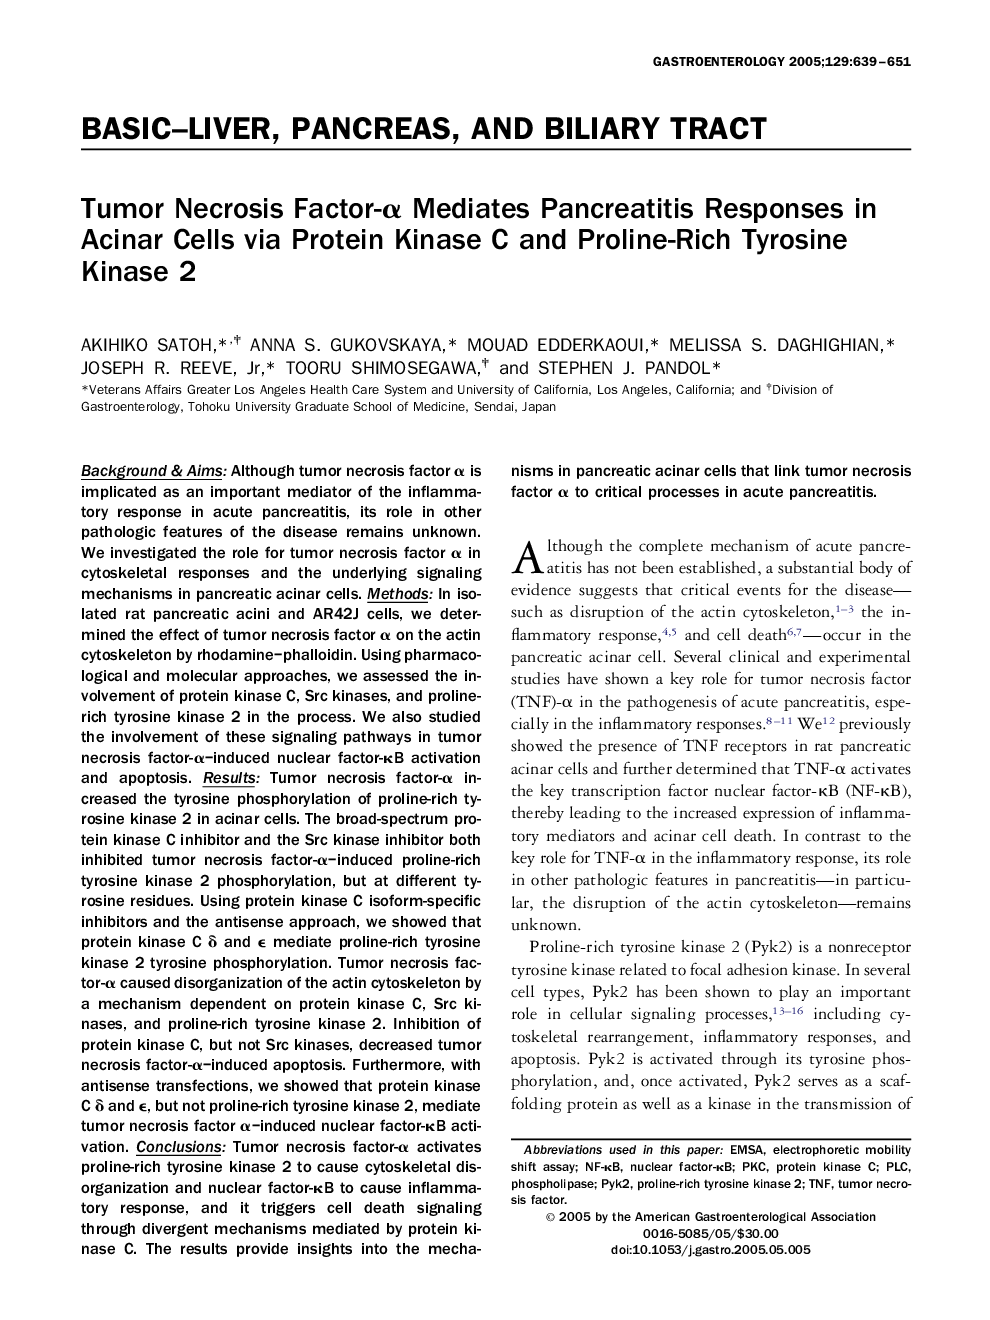 Tumor Necrosis Factor-Î± Mediates Pancreatitis Responses in Acinar Cells via Protein Kinase C and Proline-Rich Tyrosine Kinase 2